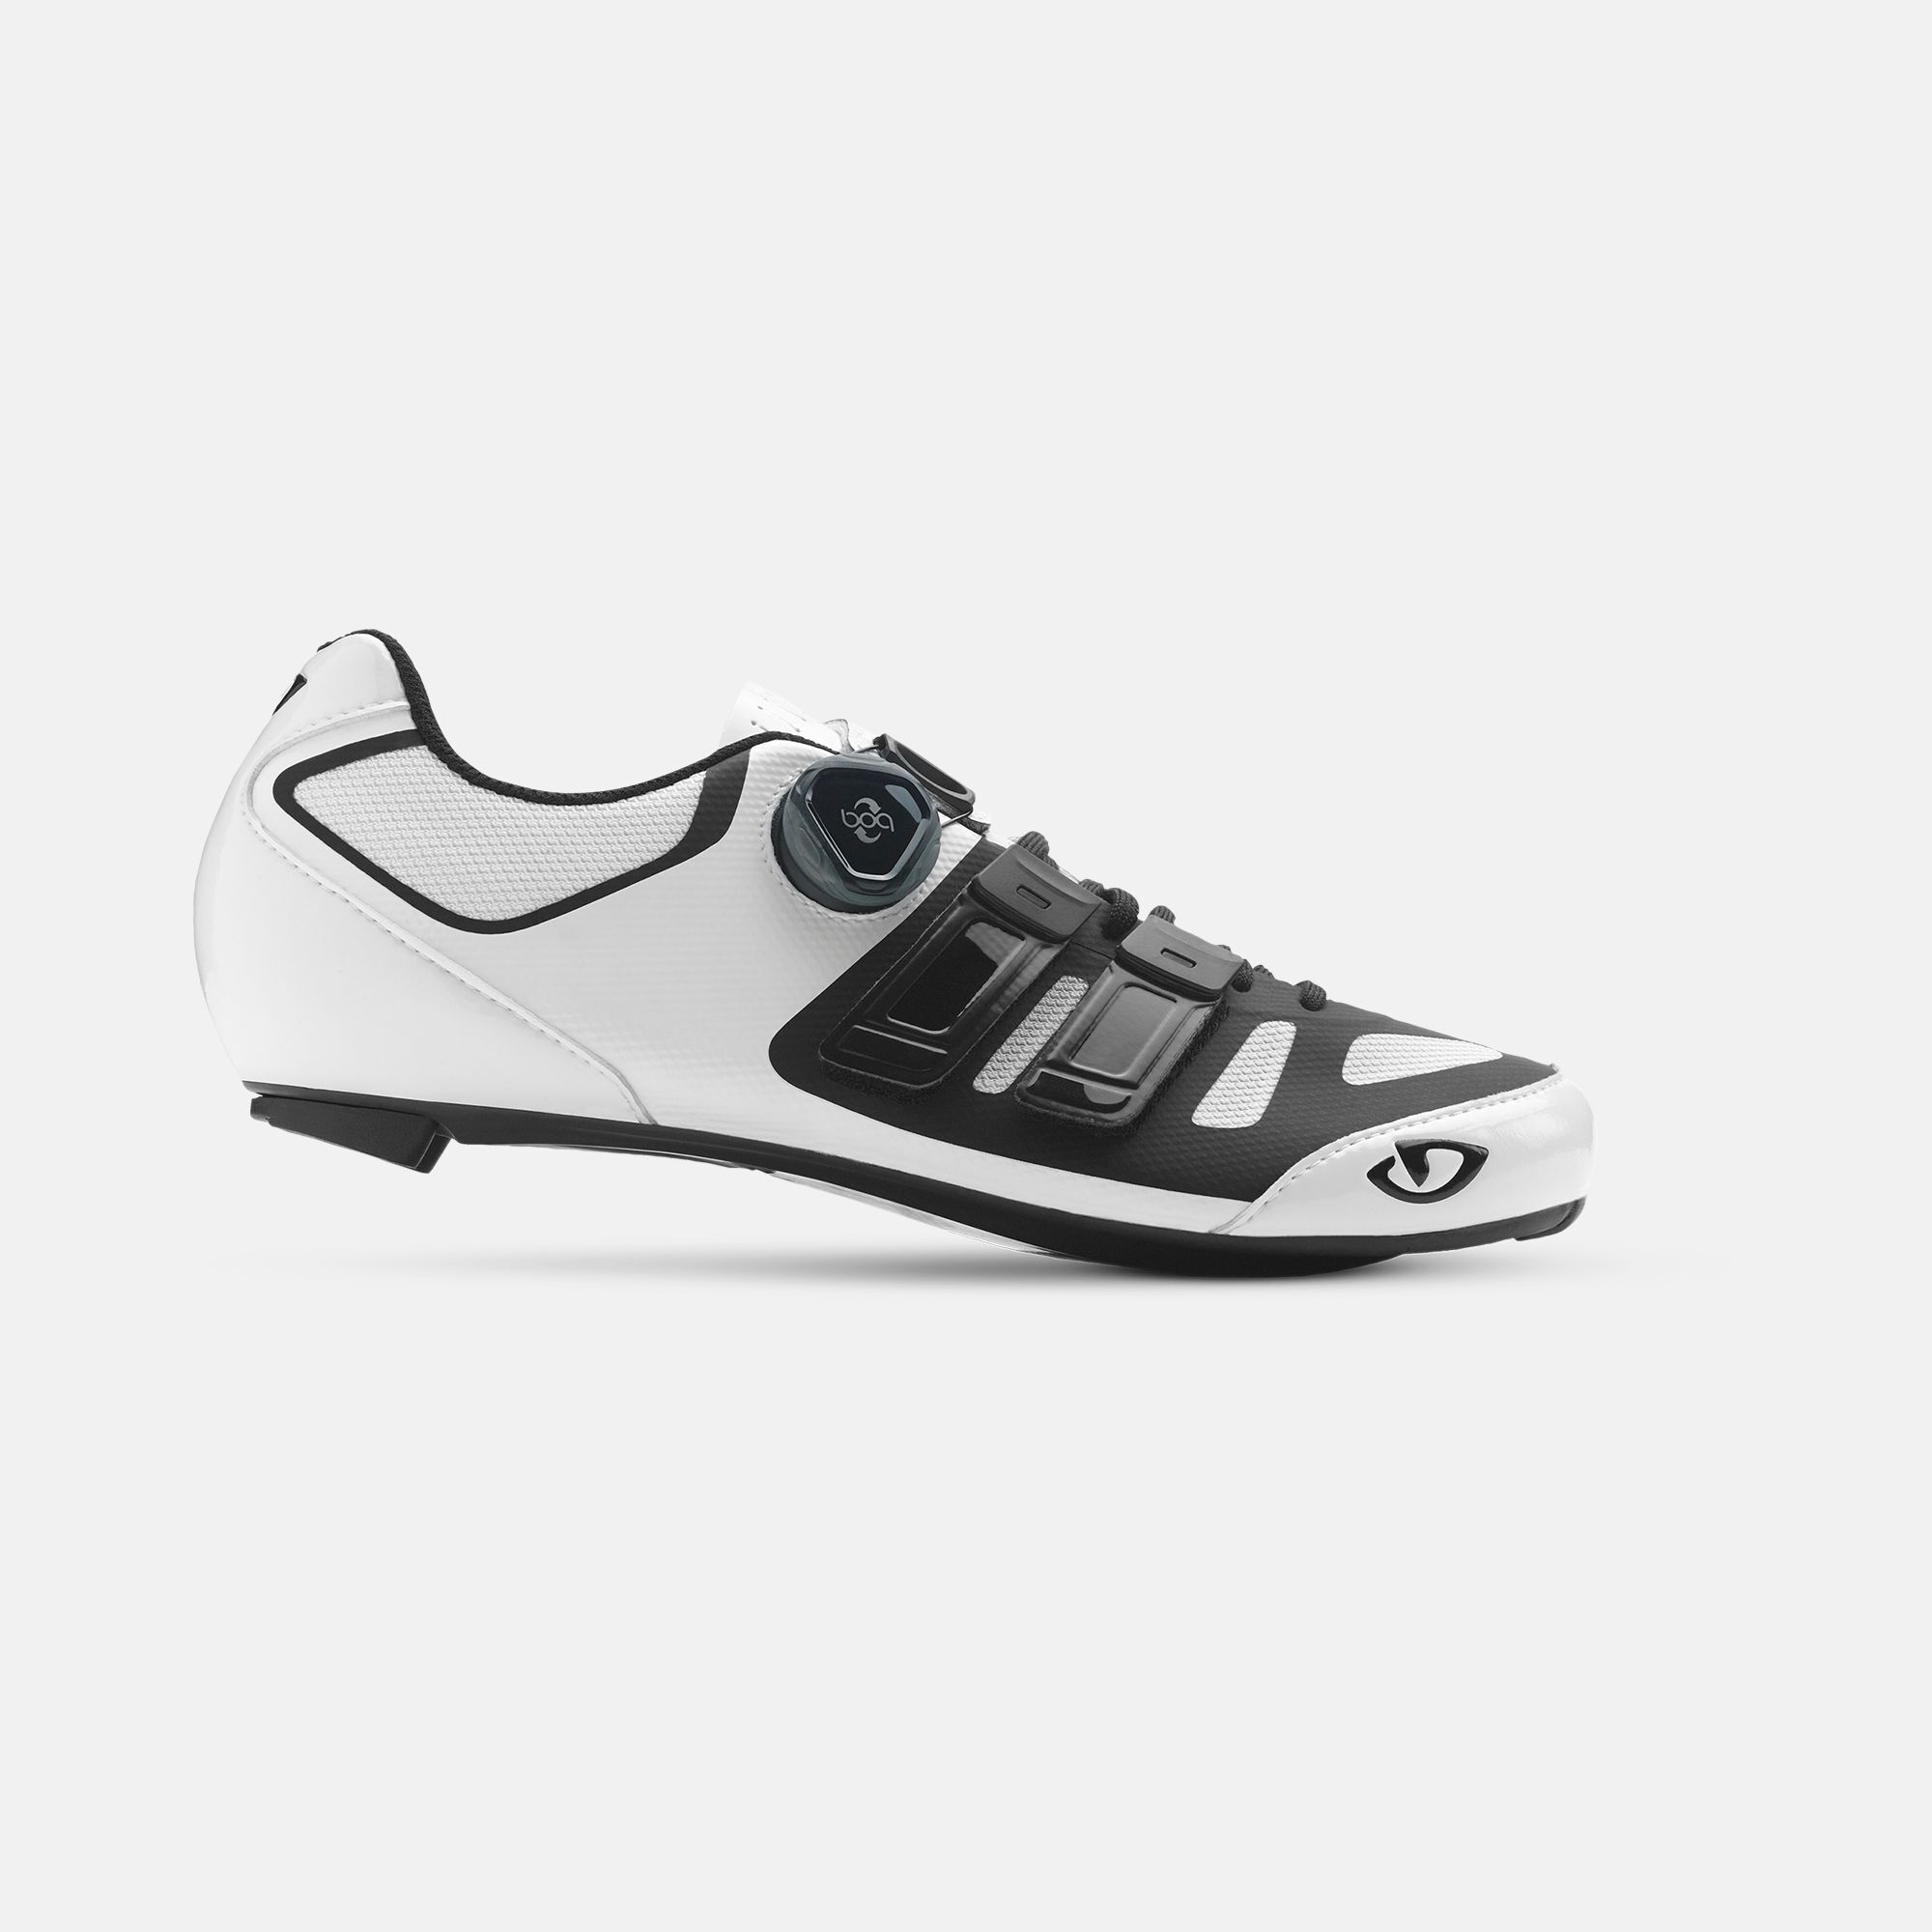 Empire E70 Knit Shoe | Giro